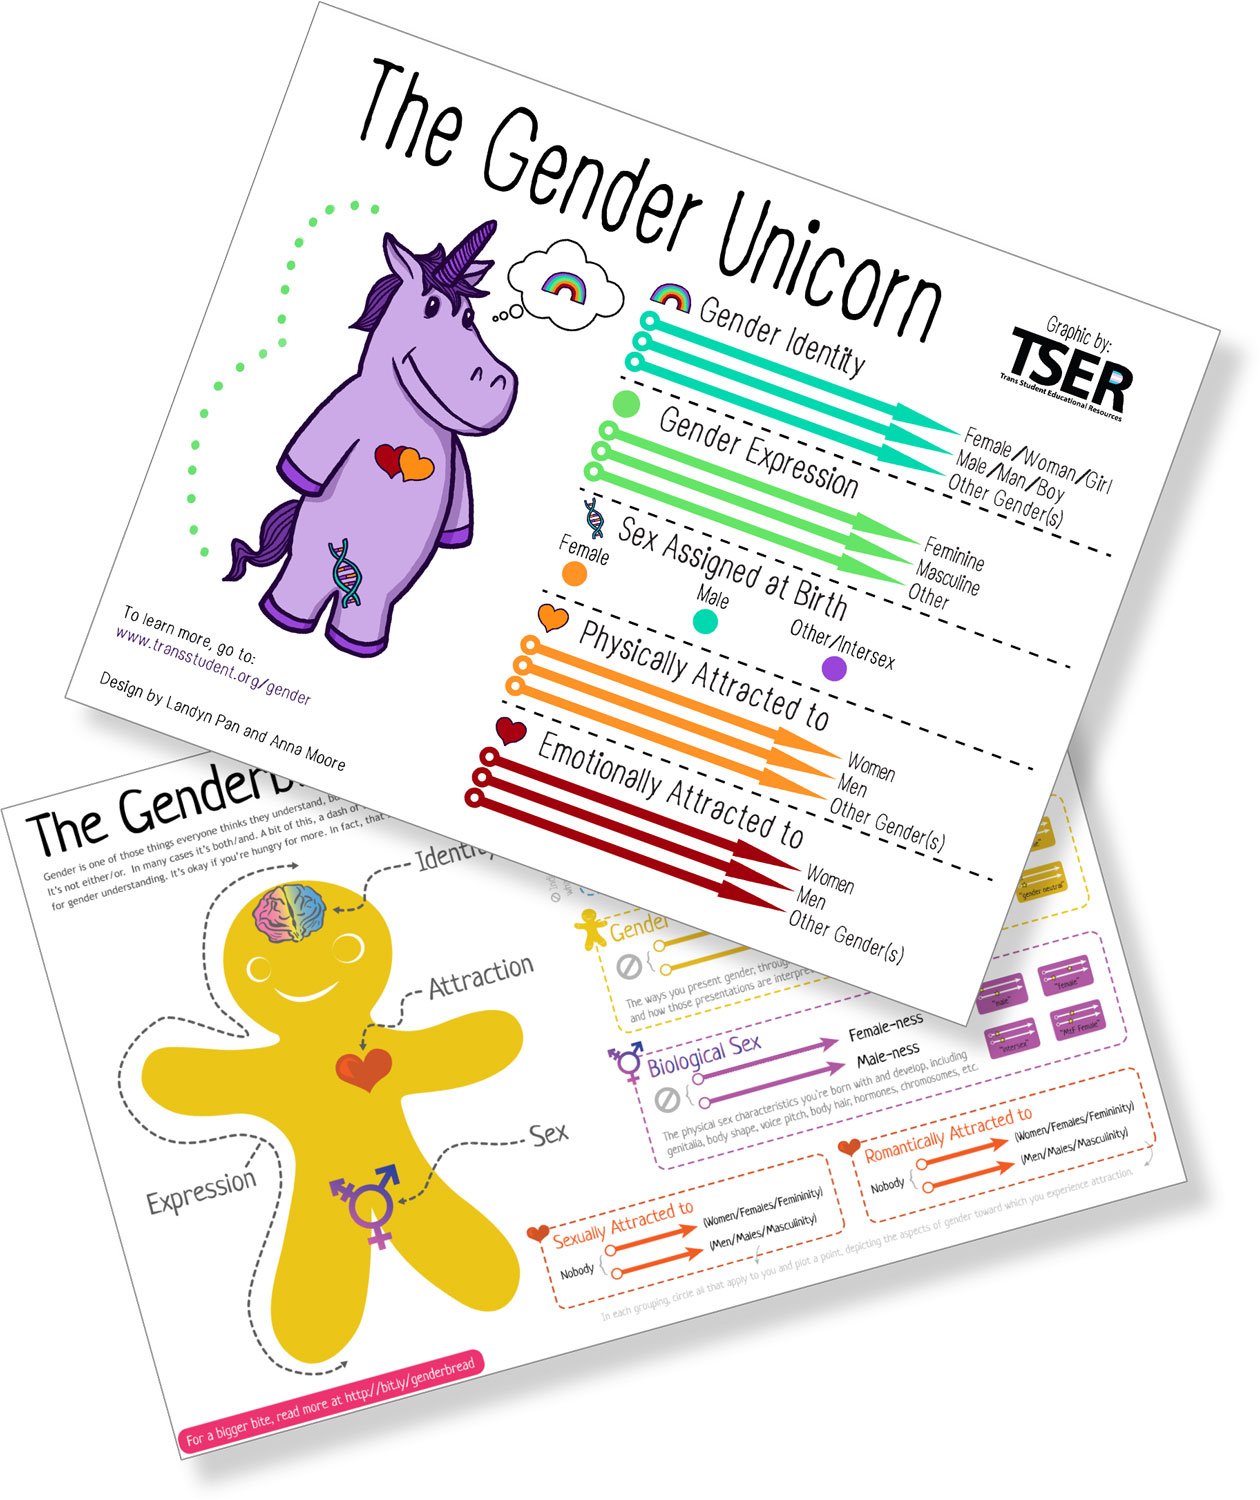 Gender-Unicorn-Thmb